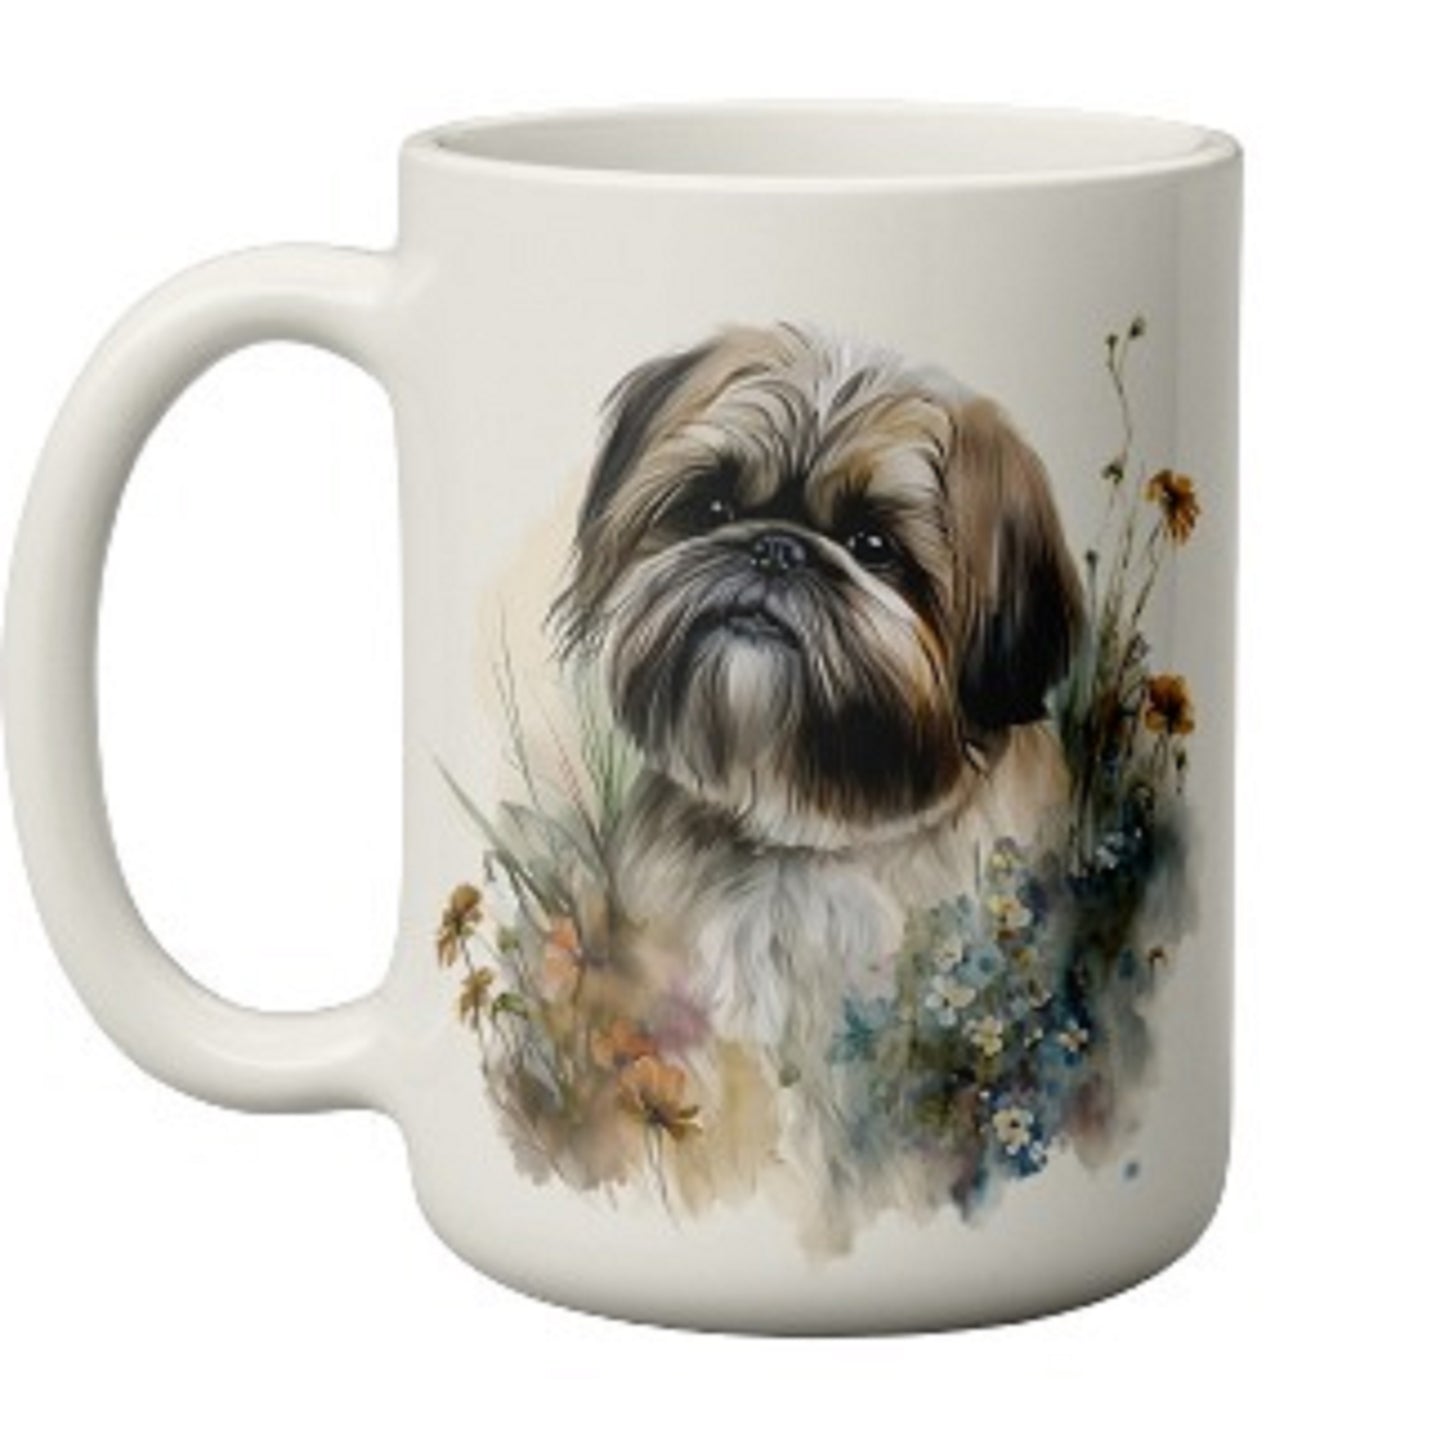  Shih Tzu Floral Coffee Mug by Free Spirit Accessories sold by Free Spirit Accessories